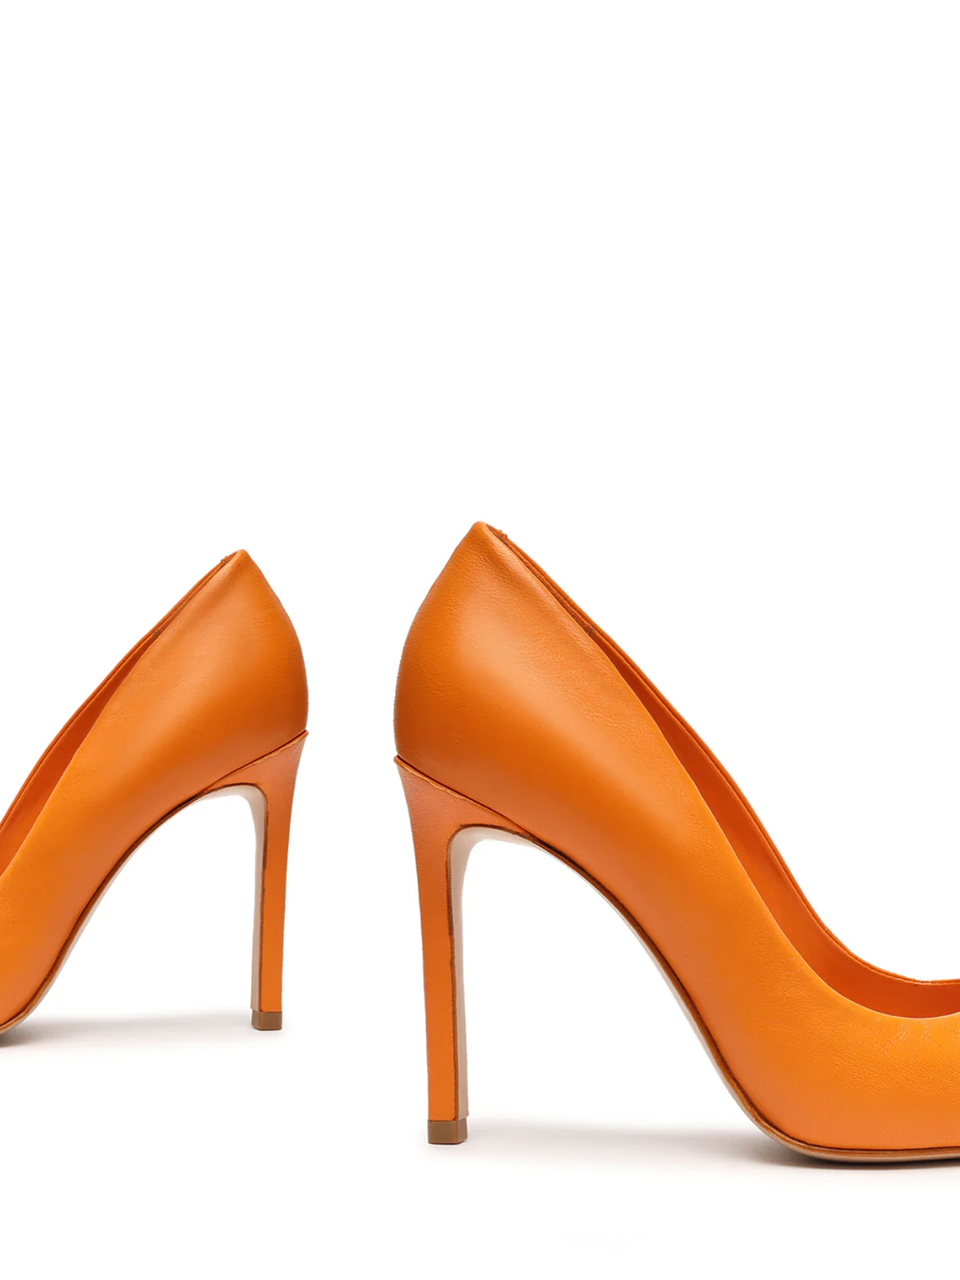 SCHUTZ Lou Pump in Bright Orange Details of Both Heels